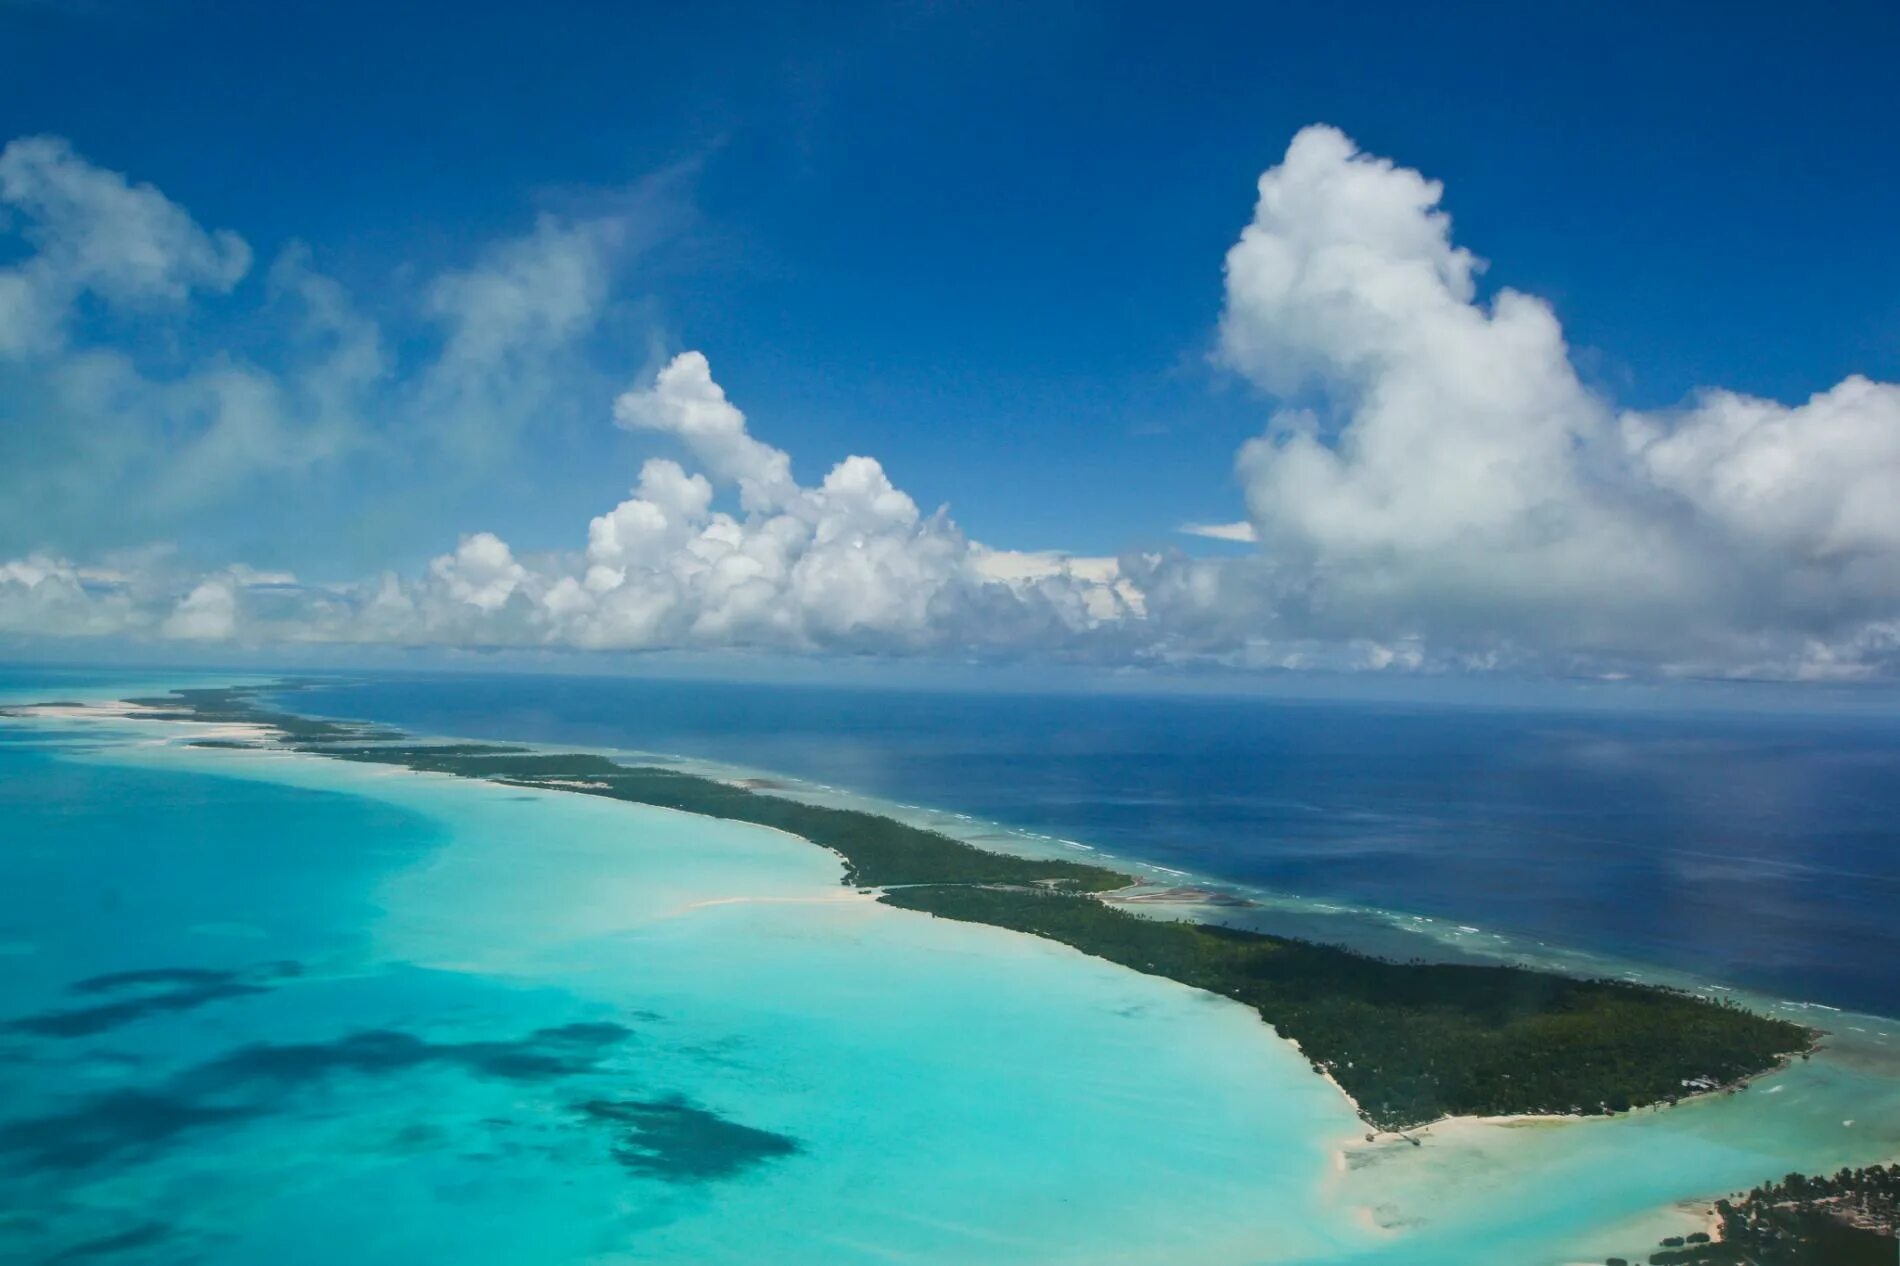 Атолл Кирибати. Кирибати остров Тарава. Атолл в тихом океане. Острова Гилберта, Кирибати.